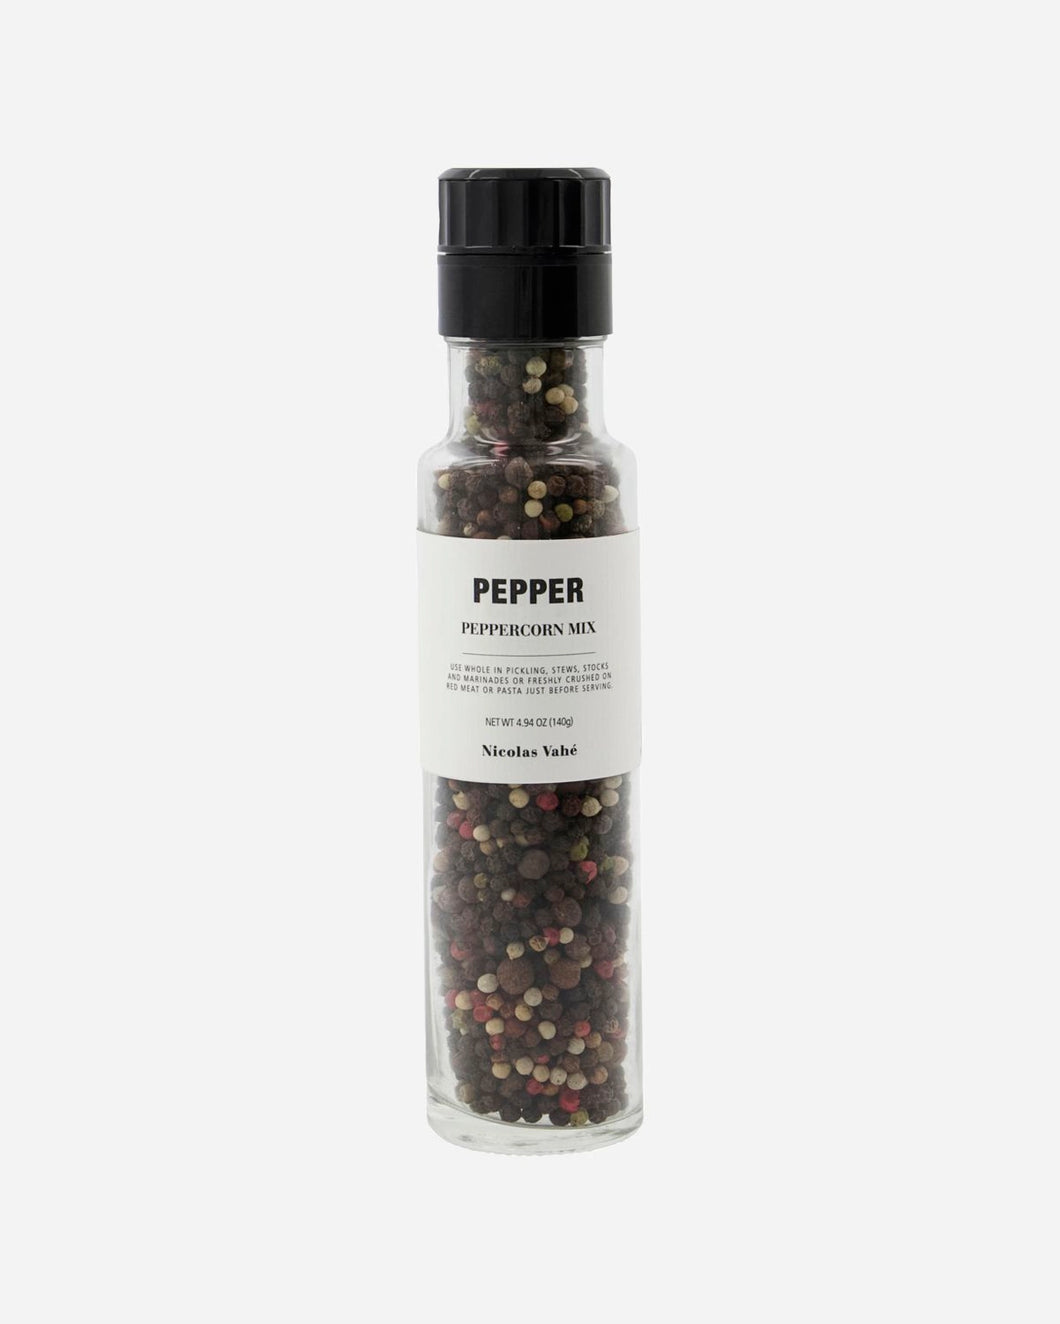 Nicolas Vahé Pepper, Peppercorn Mix